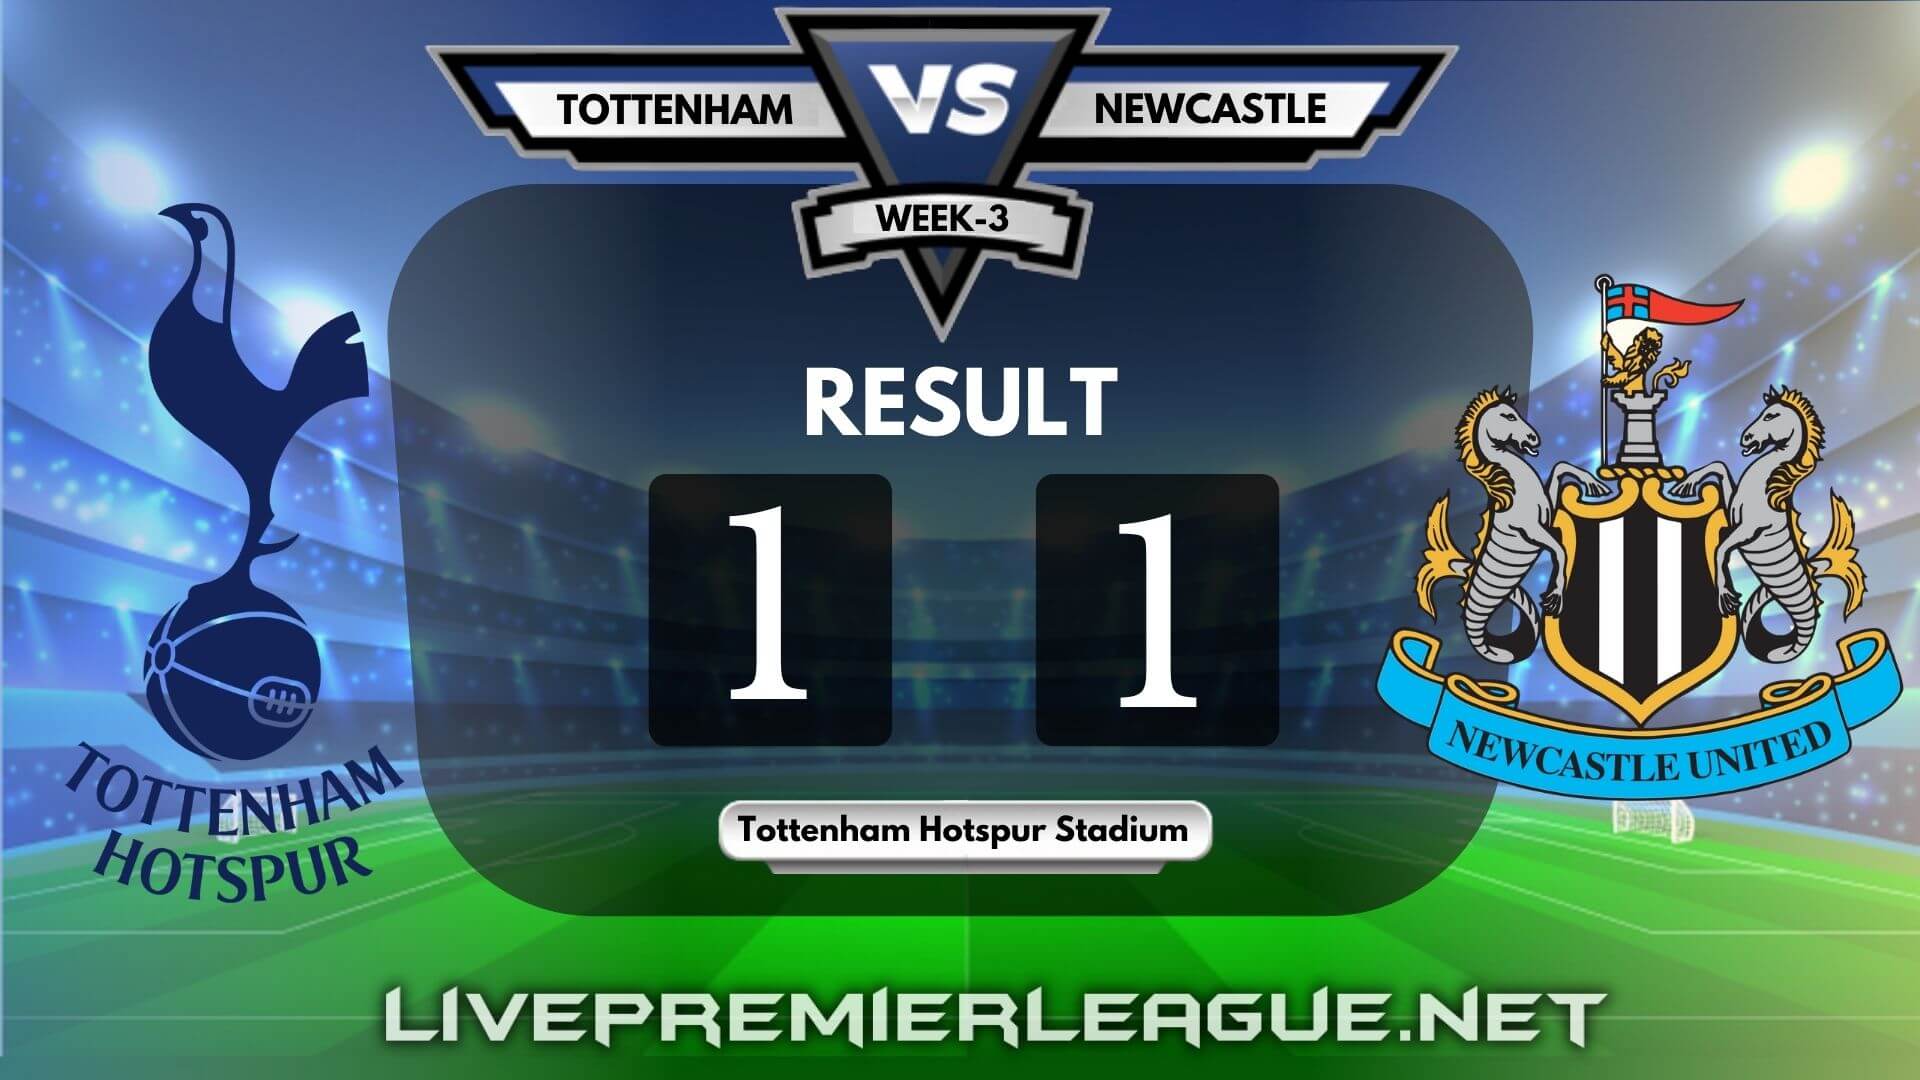 Tottenham Hotspur Vs Newcastle United | Week 3 Result 2020